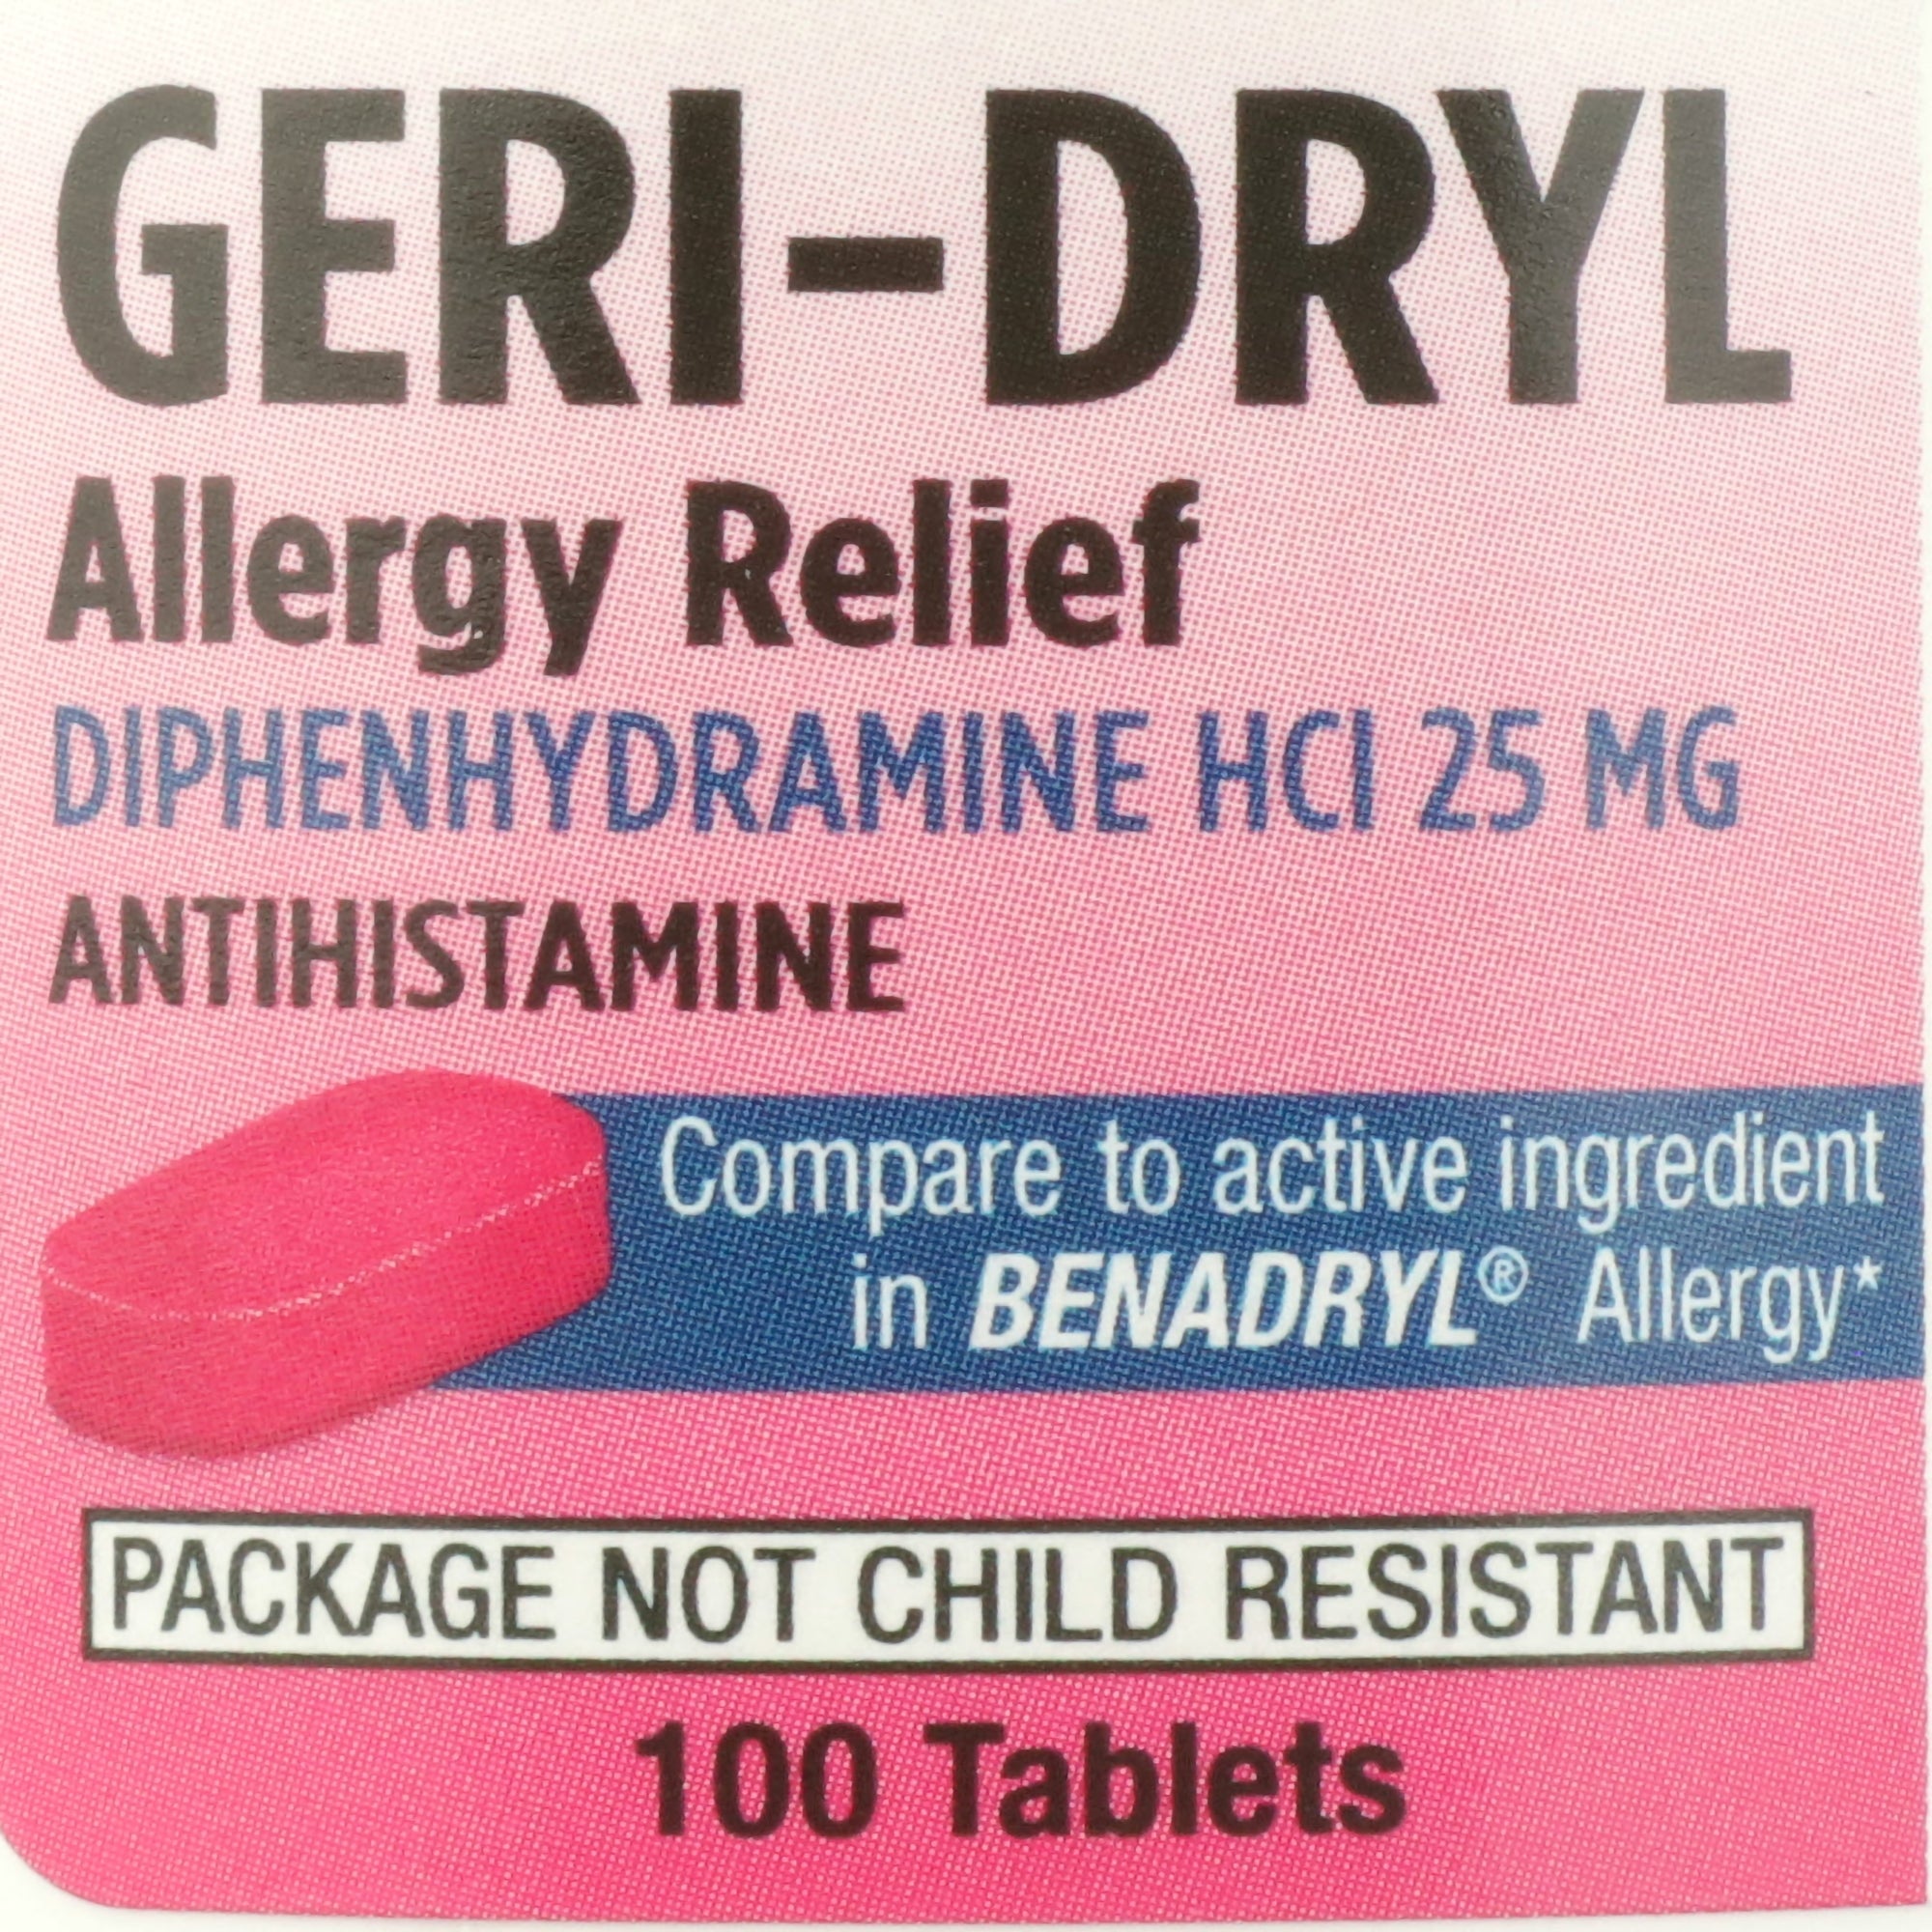 Allergy Relief Geri-Dryl 25 mg Strength Tablet 100 per Bottle